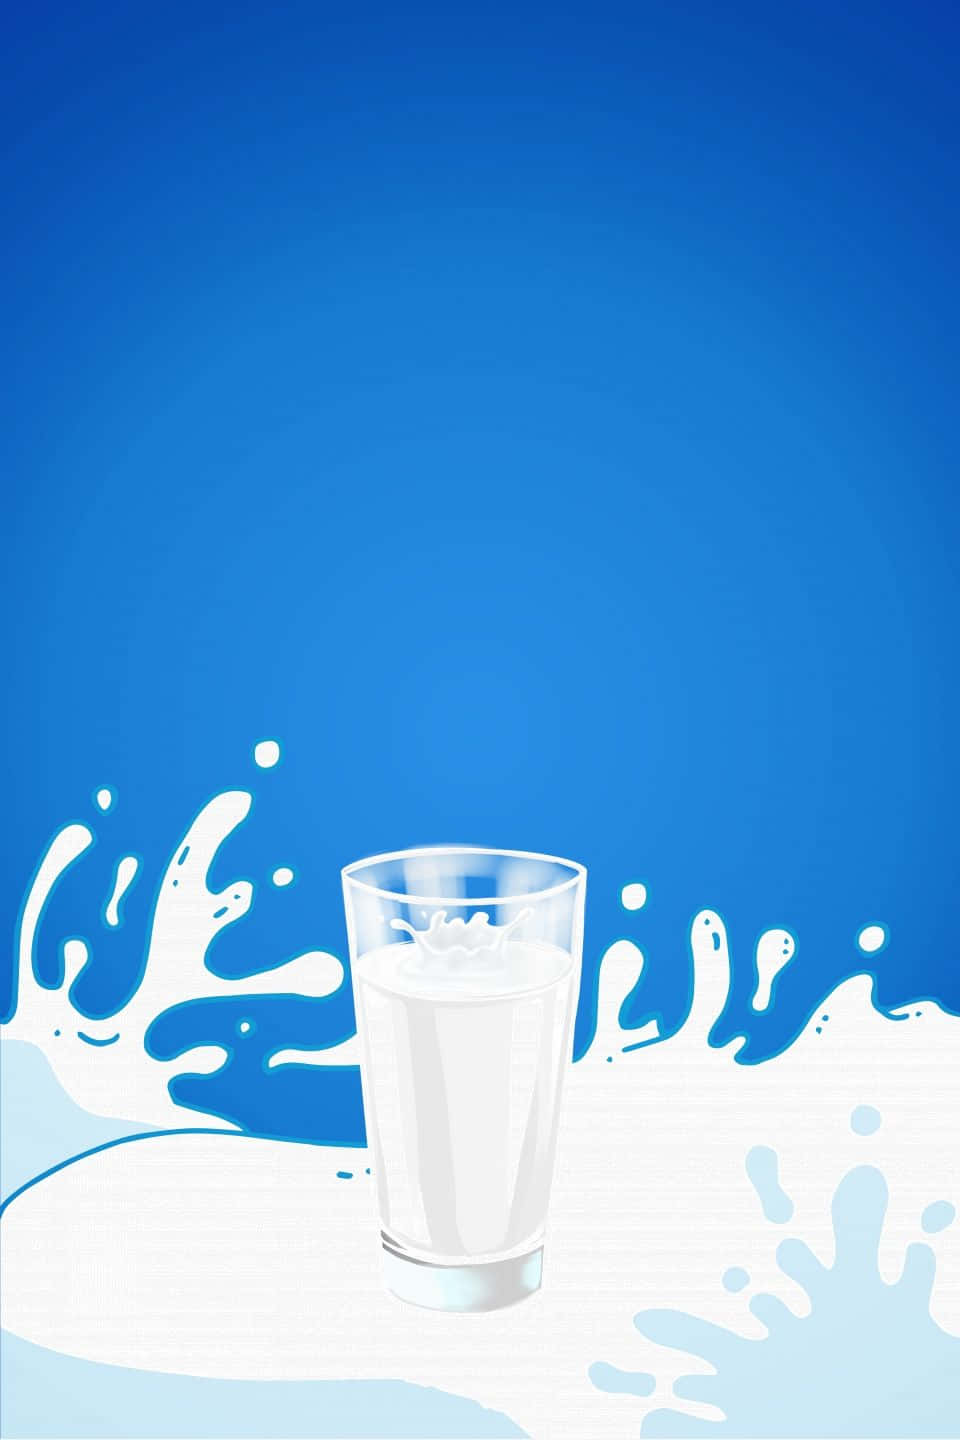 Ettglas Mjölk På En Blå Bakgrund